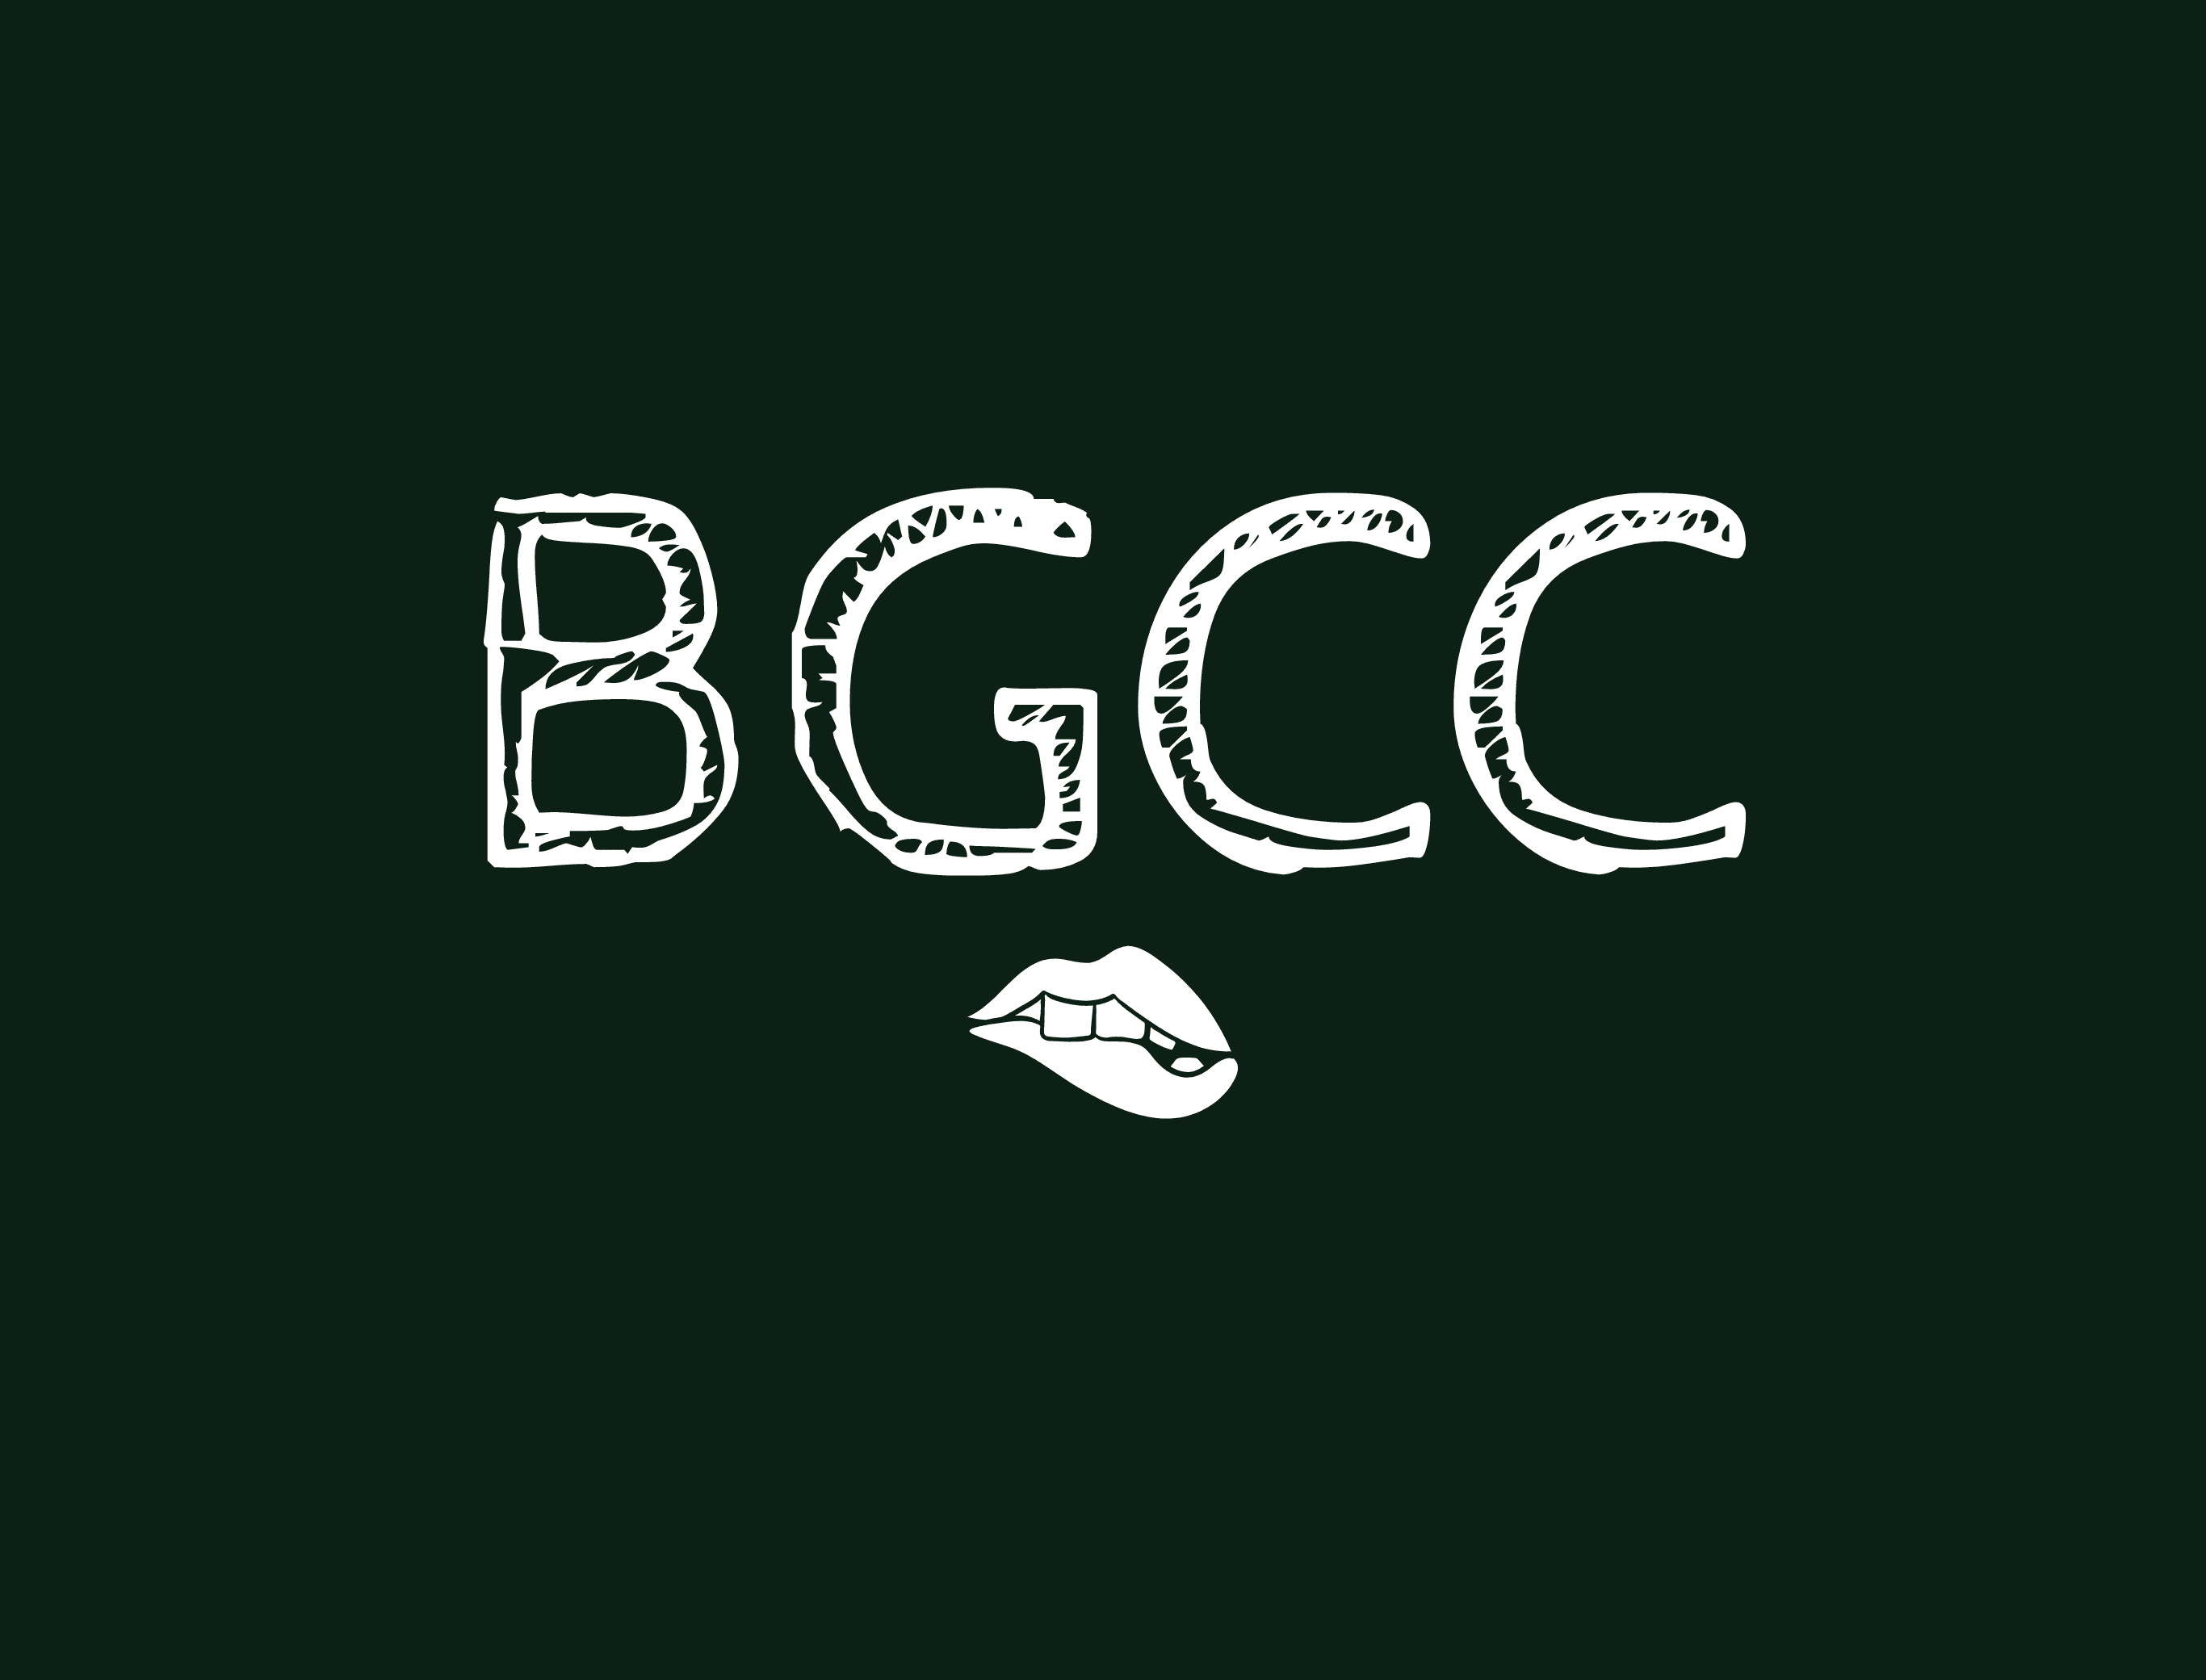 BGCC Genesis